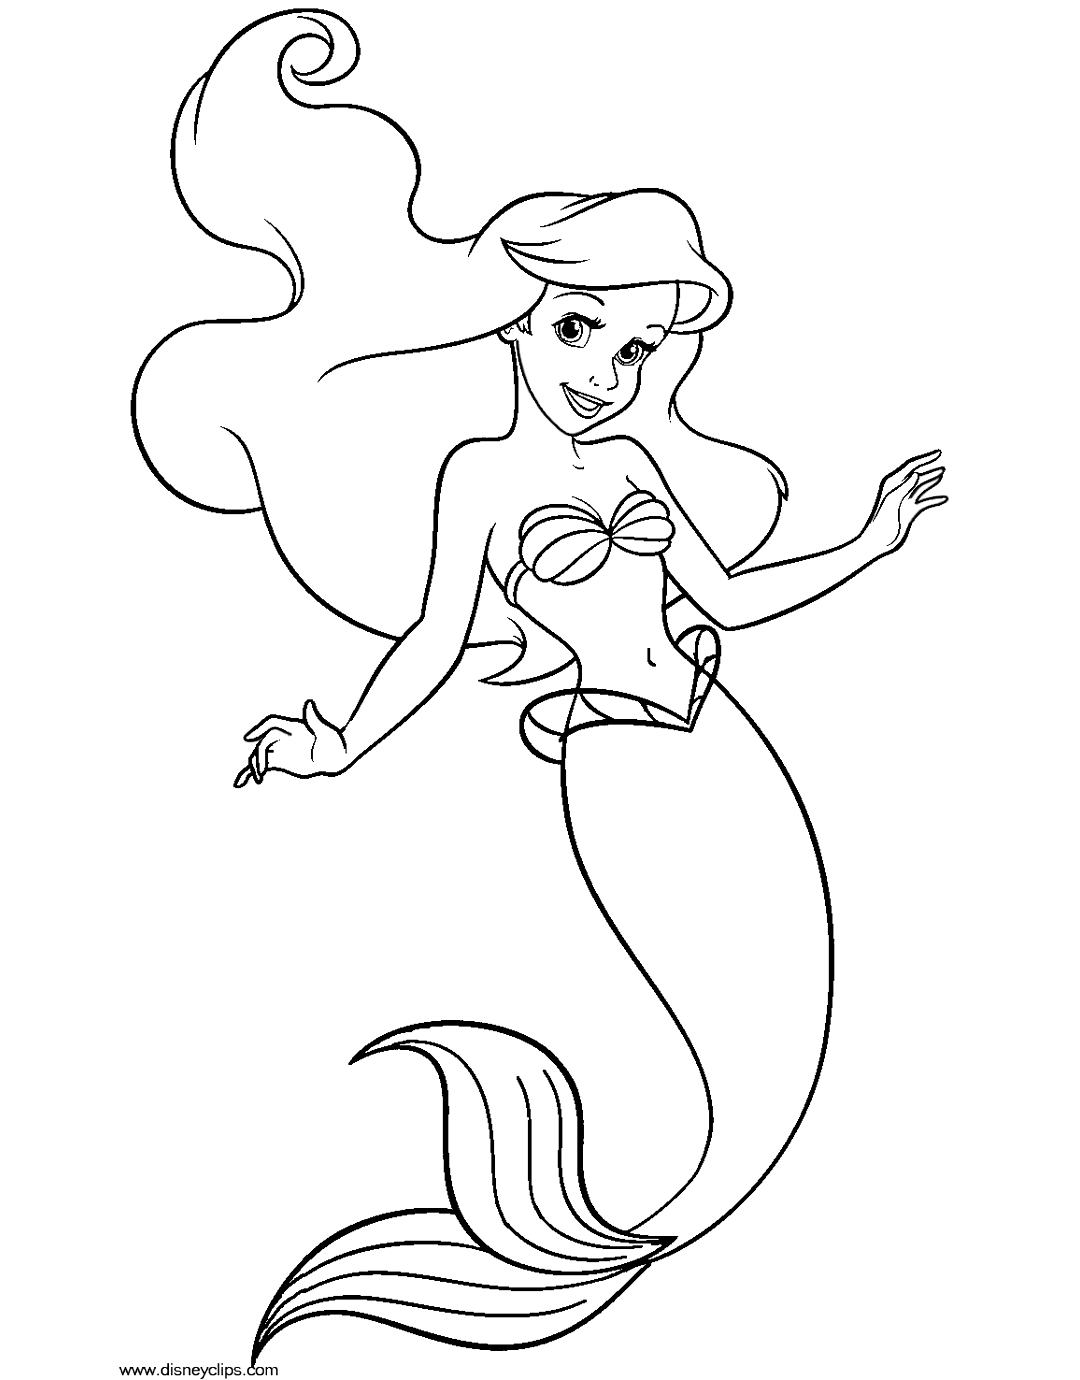 Goodly Princess Ariel Coloring Page